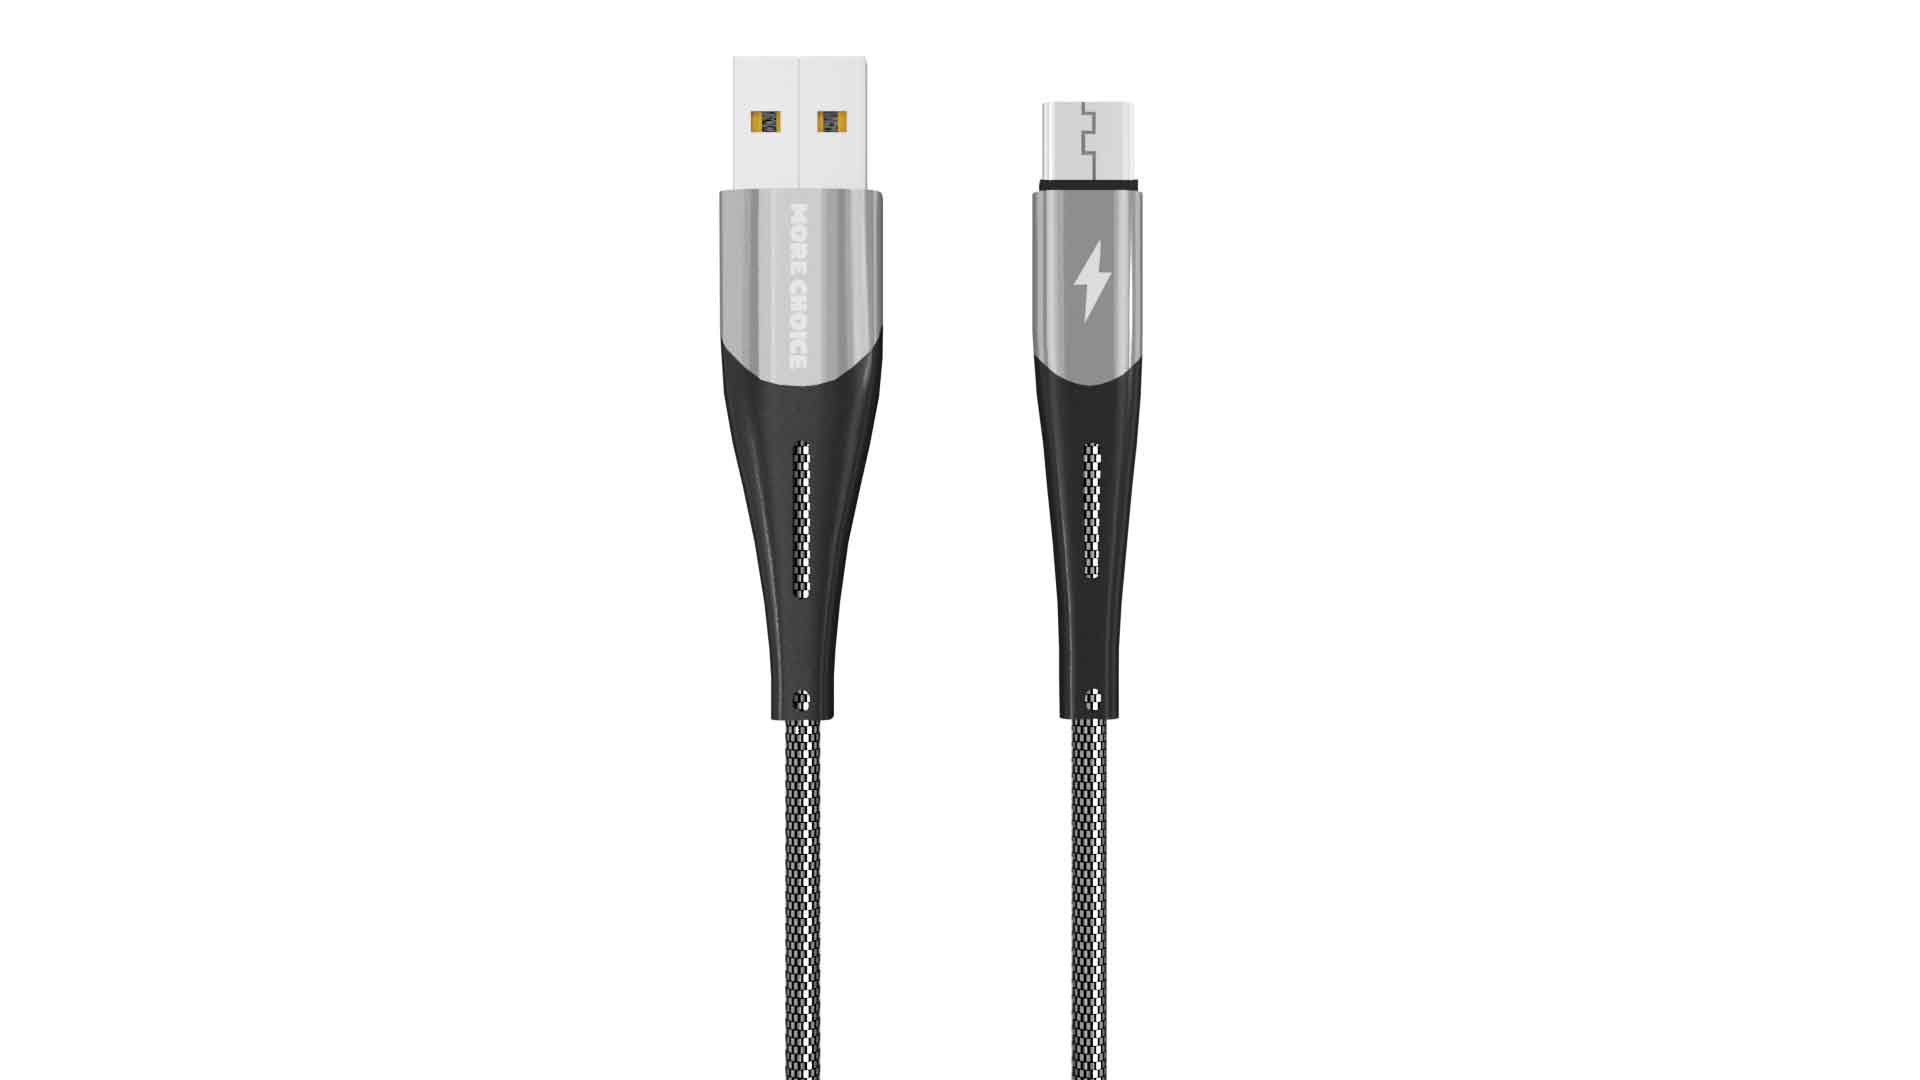 Дата-кабель More choice K41Sm New Silver Black Smart USB 3.0A для micro USB New нейлон 1м